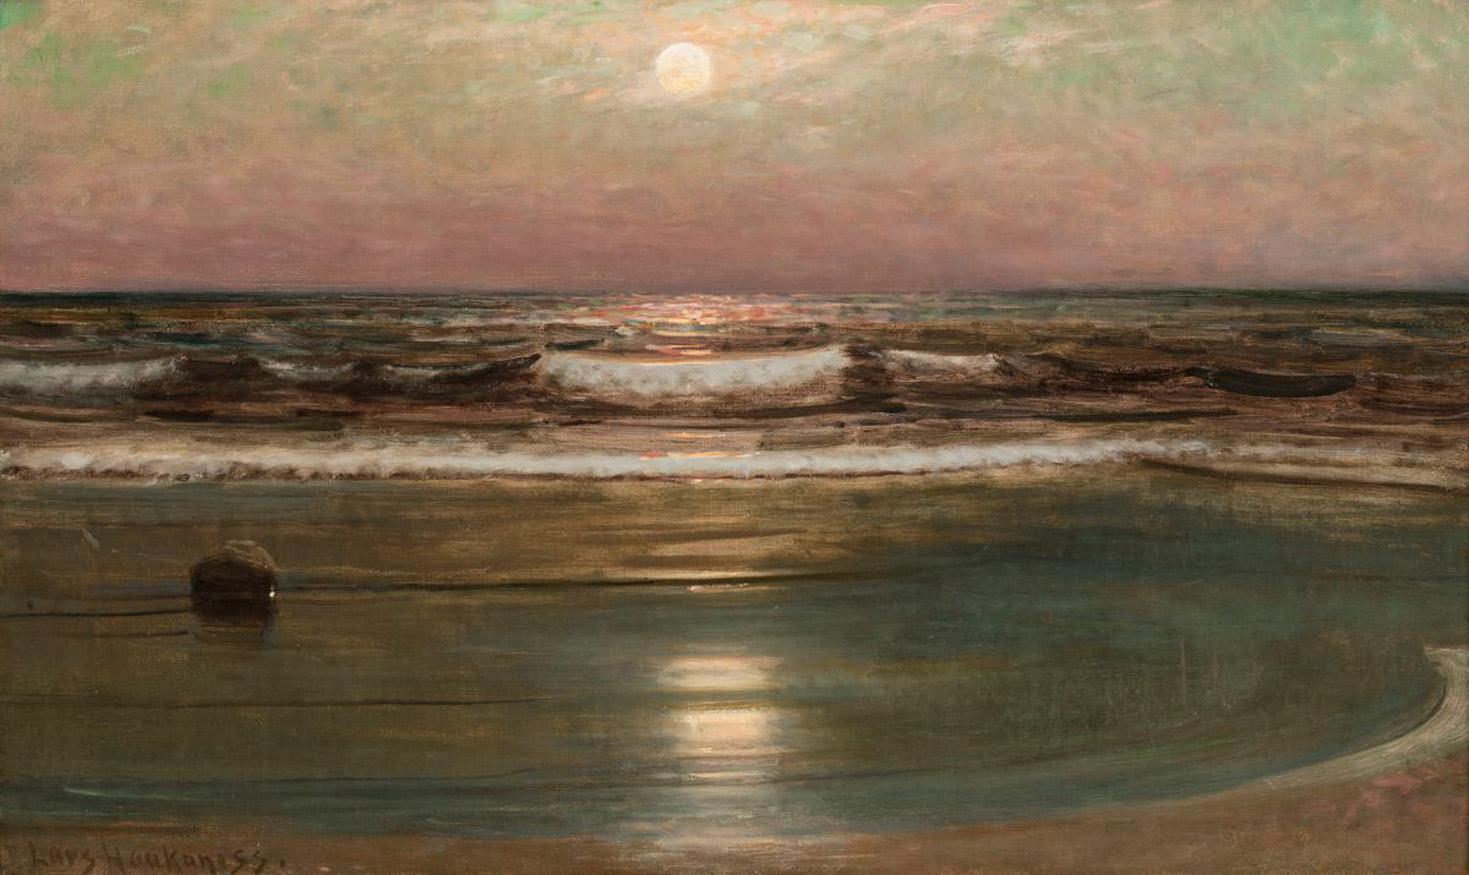 Lars Jonson Haukaness (1862-1929) Landscape Painting - Seascape, a Tonalist painting by Lars Jonson Haukaness (1862-1929, American)